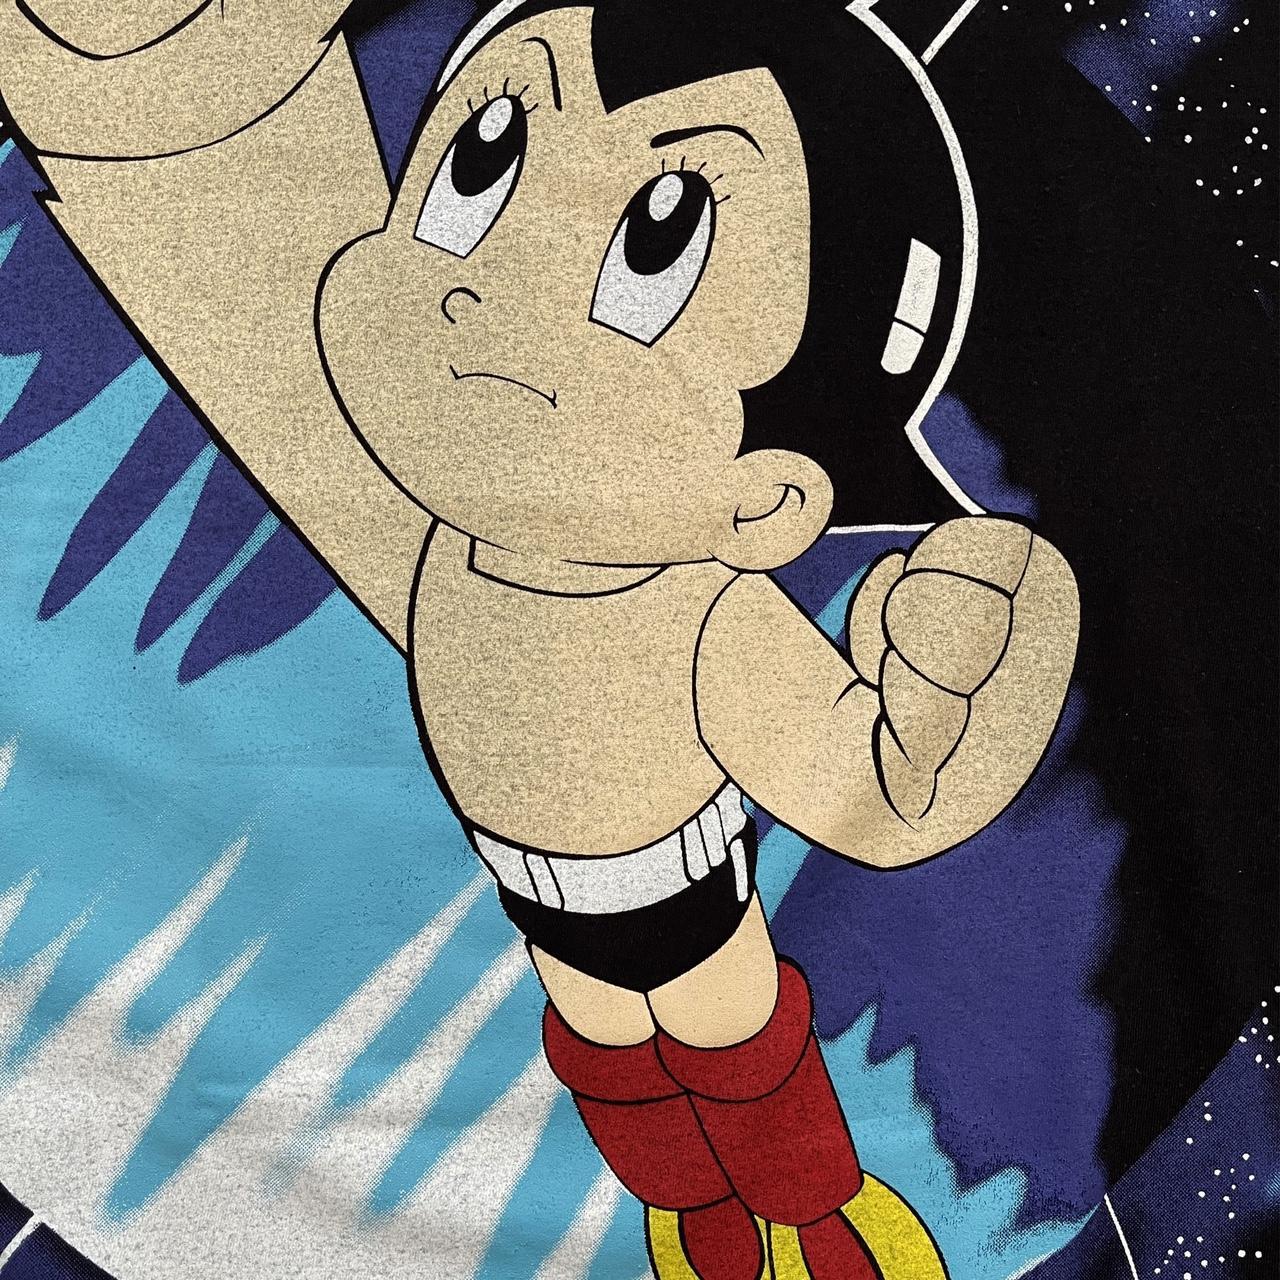 Vintage Astro Boy T-Shirt